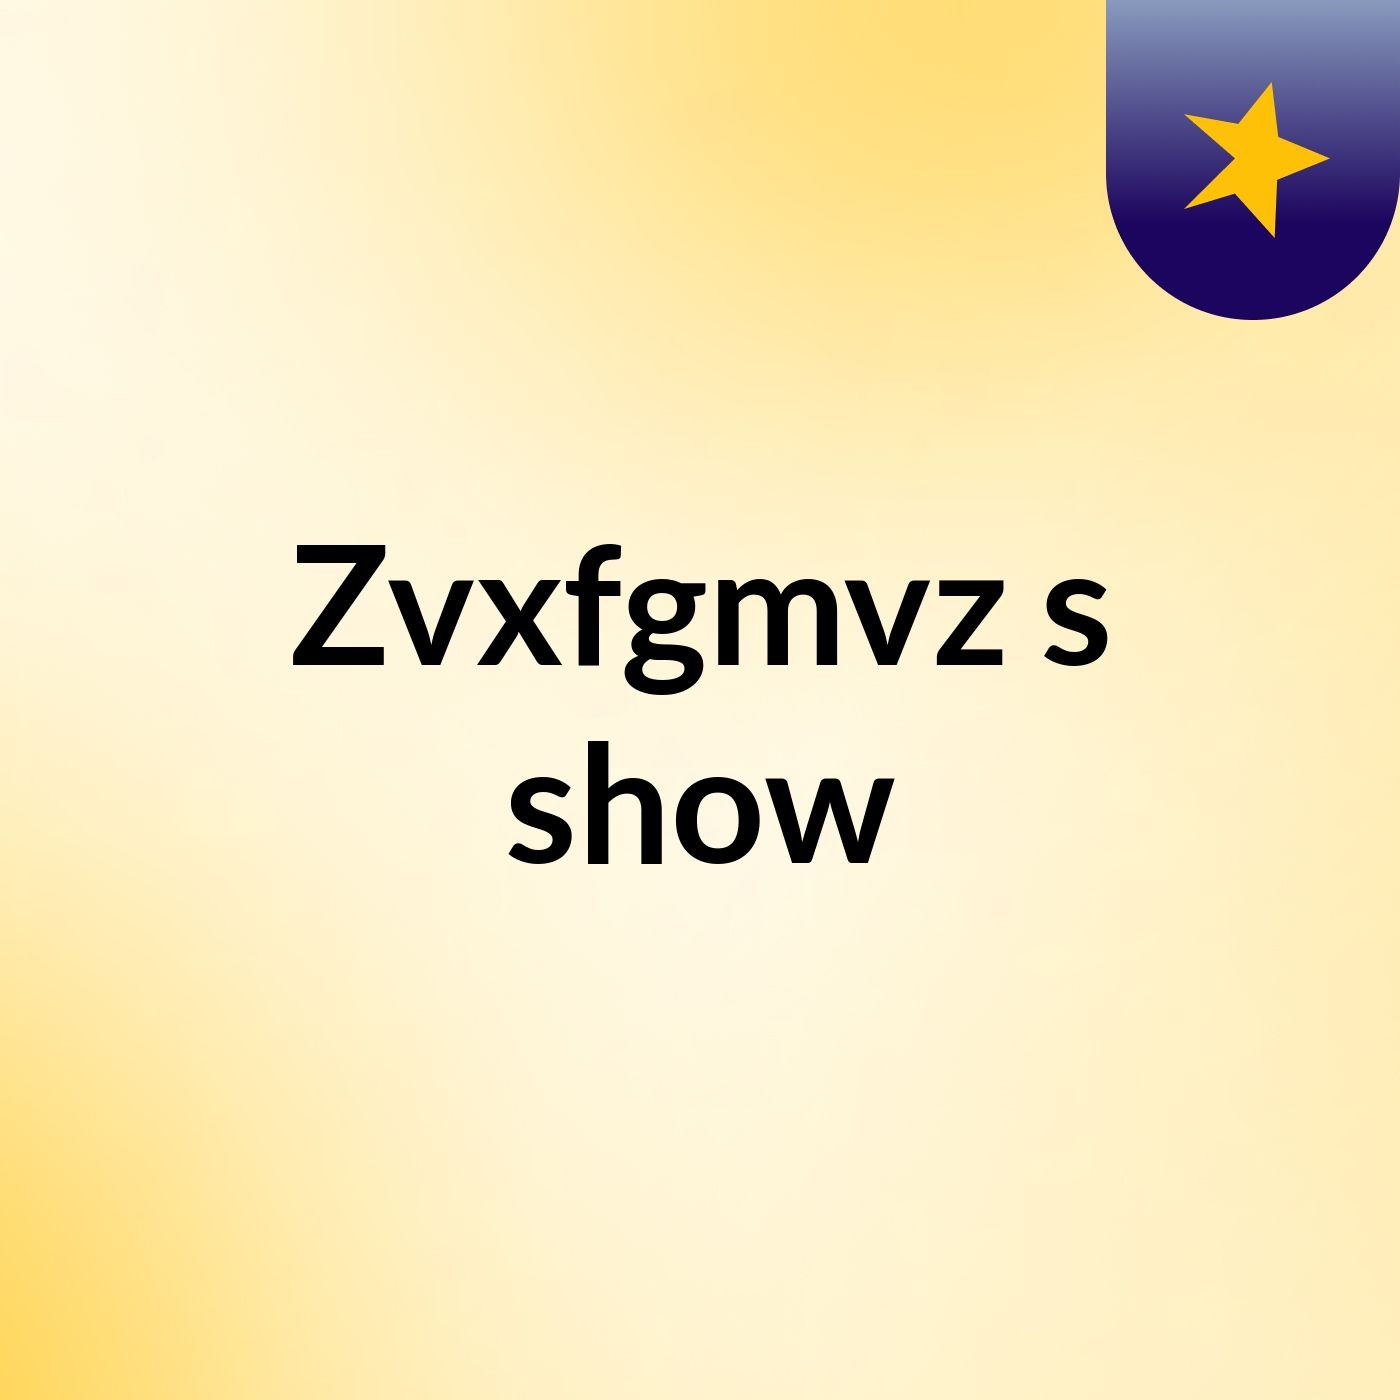 Zvxfgmvz's show